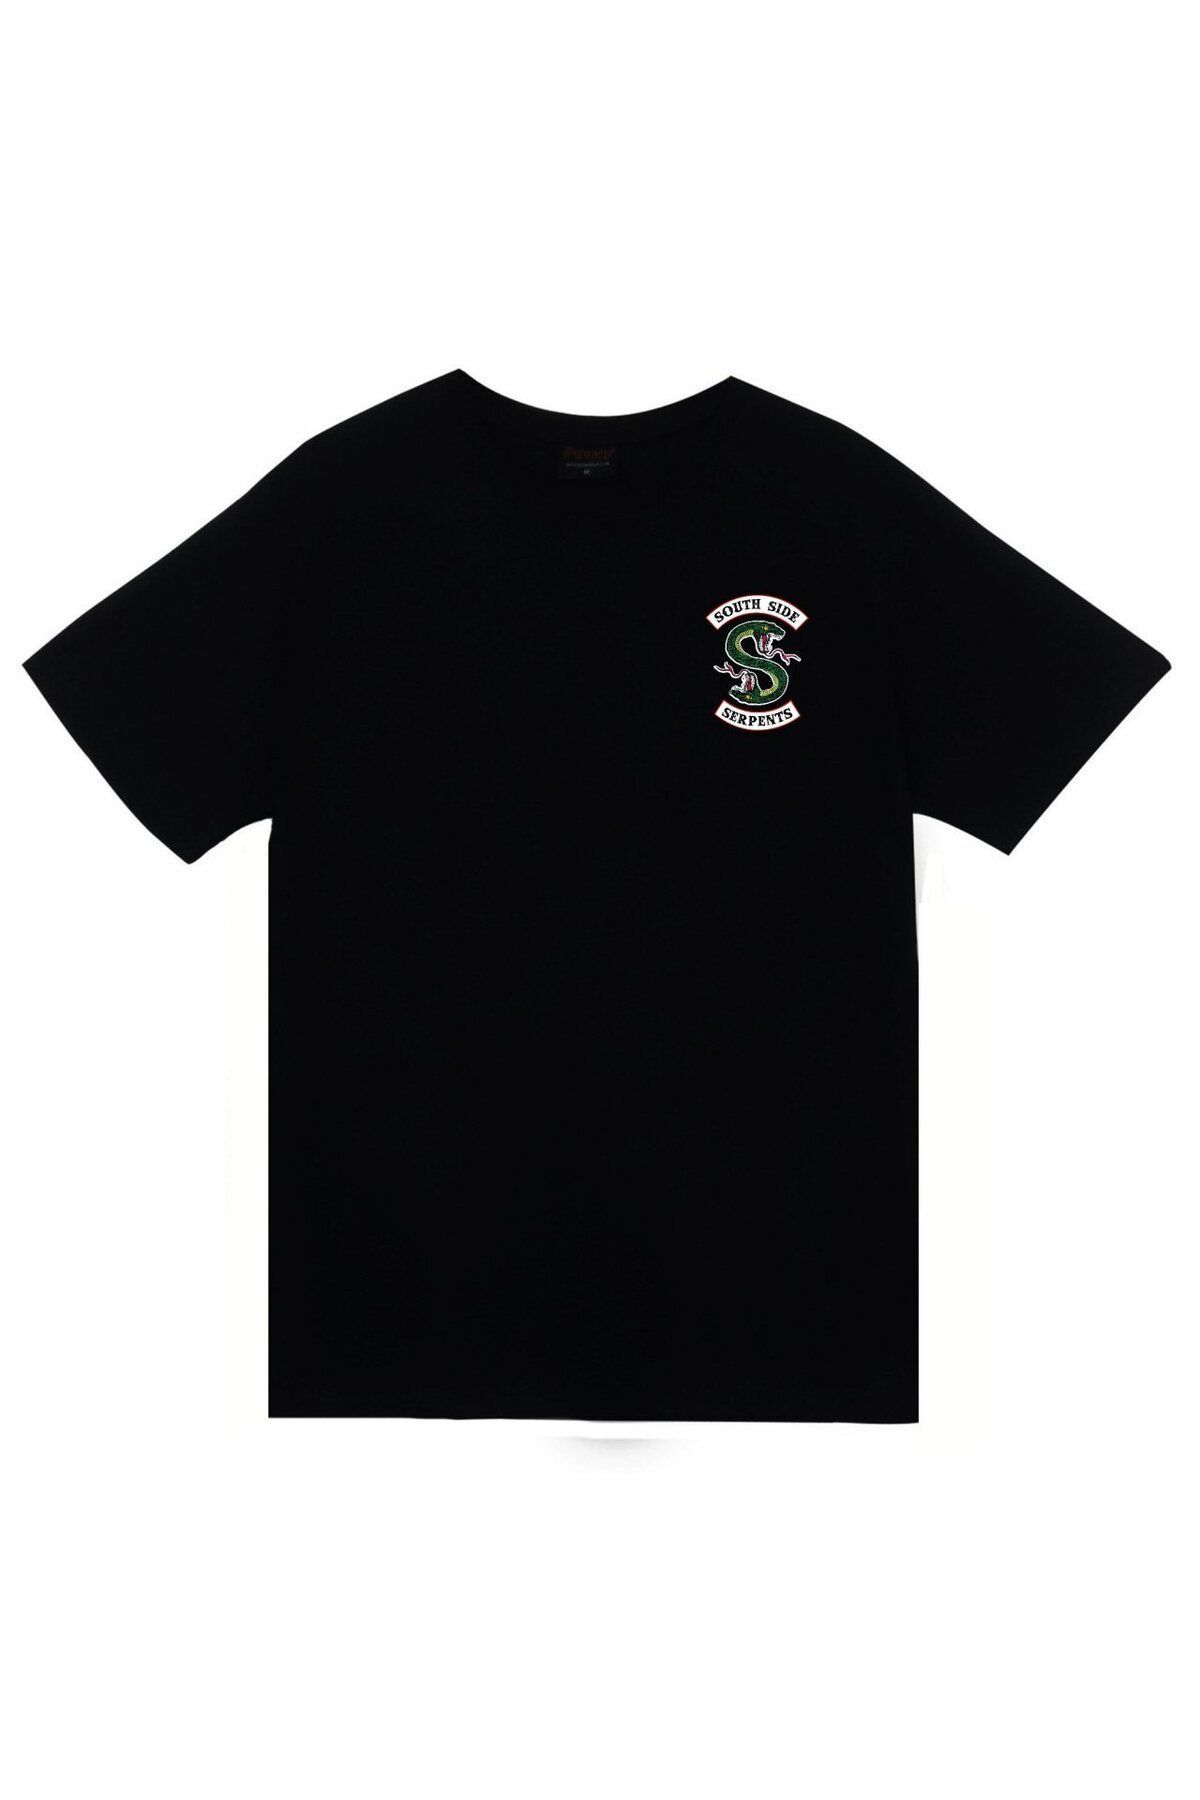 fame-stoned Unisex Siyah Riverdale Southside Serpents Baskılı T-shirt